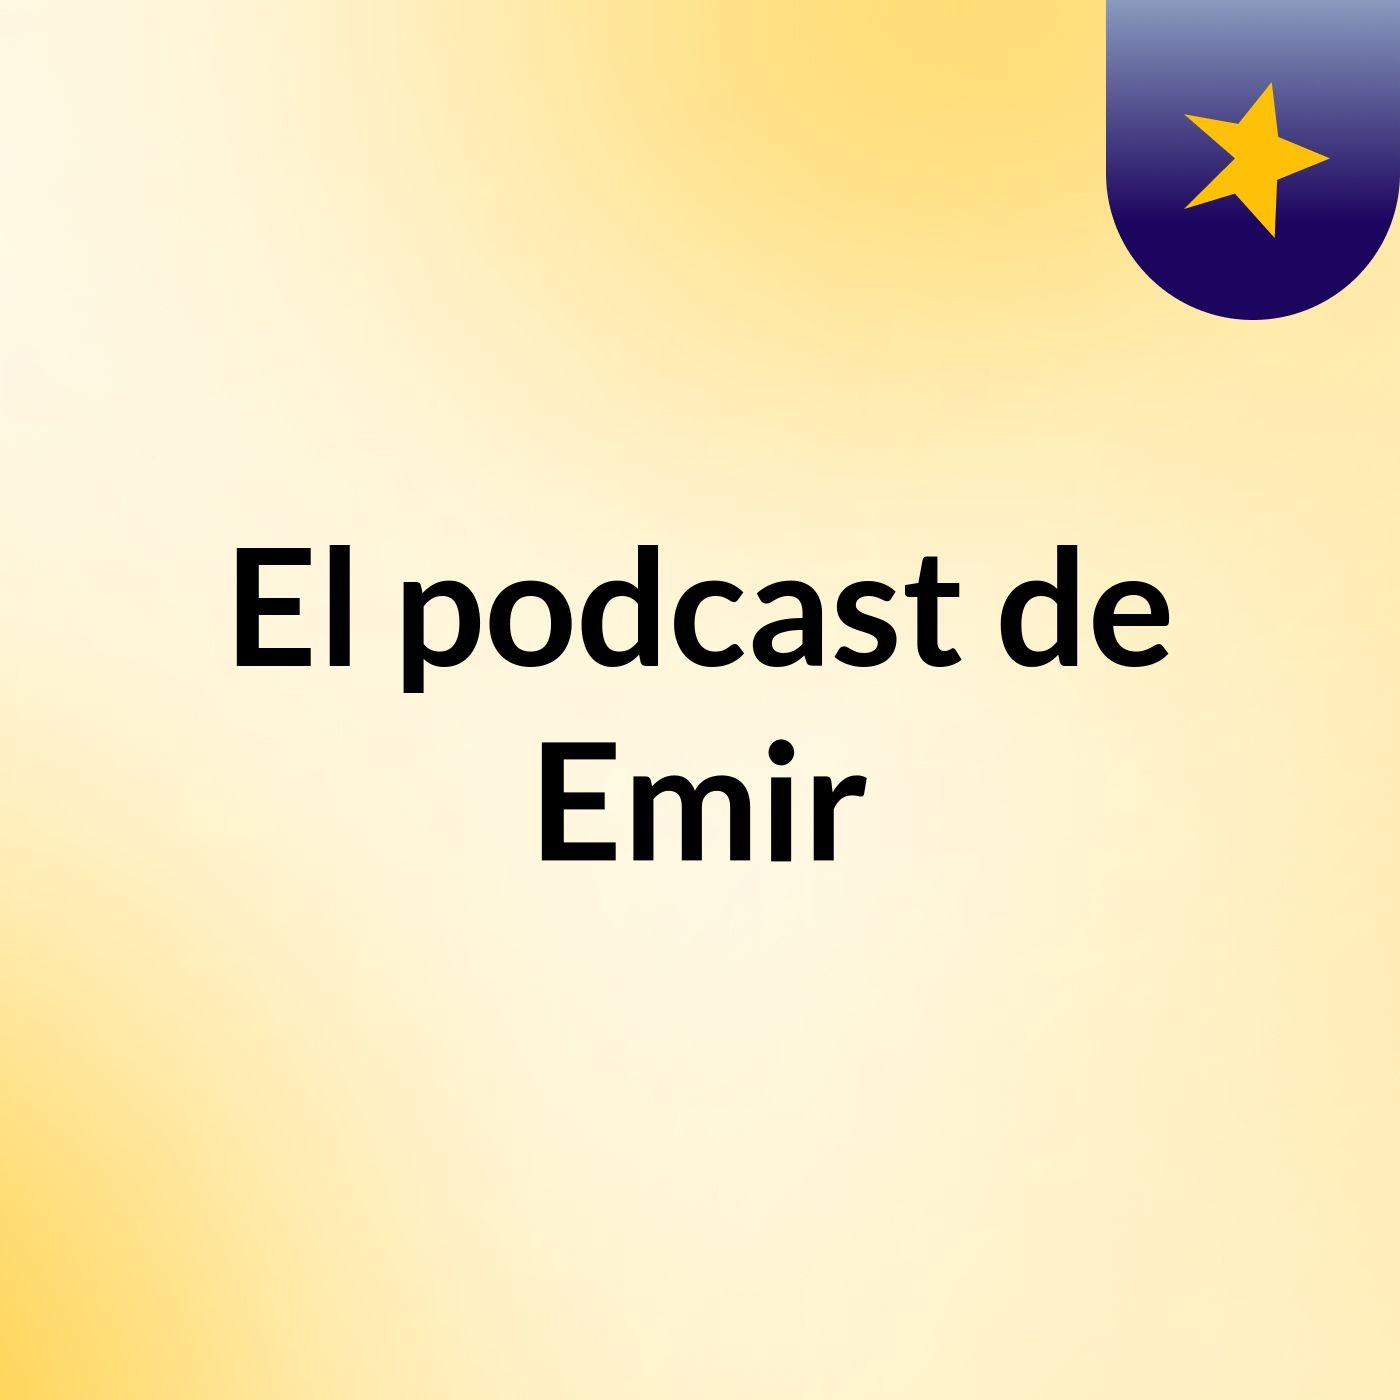 Episodio 3 - El podcast de Emir